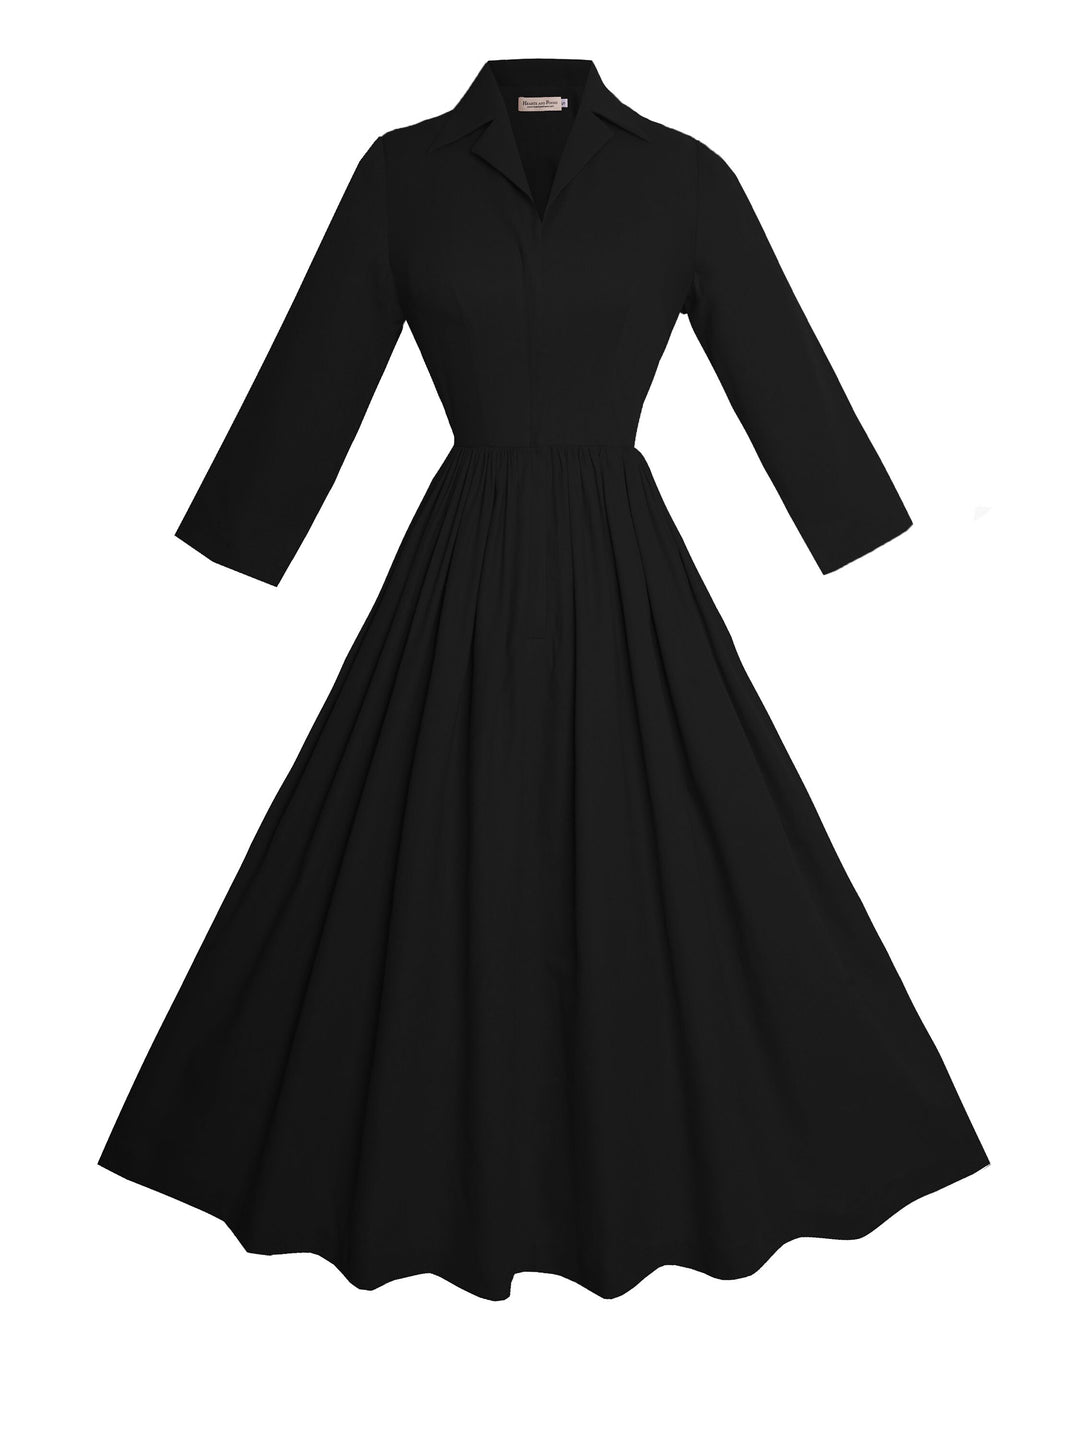 MTO - Natalie Dress in Midnight Black LINEN